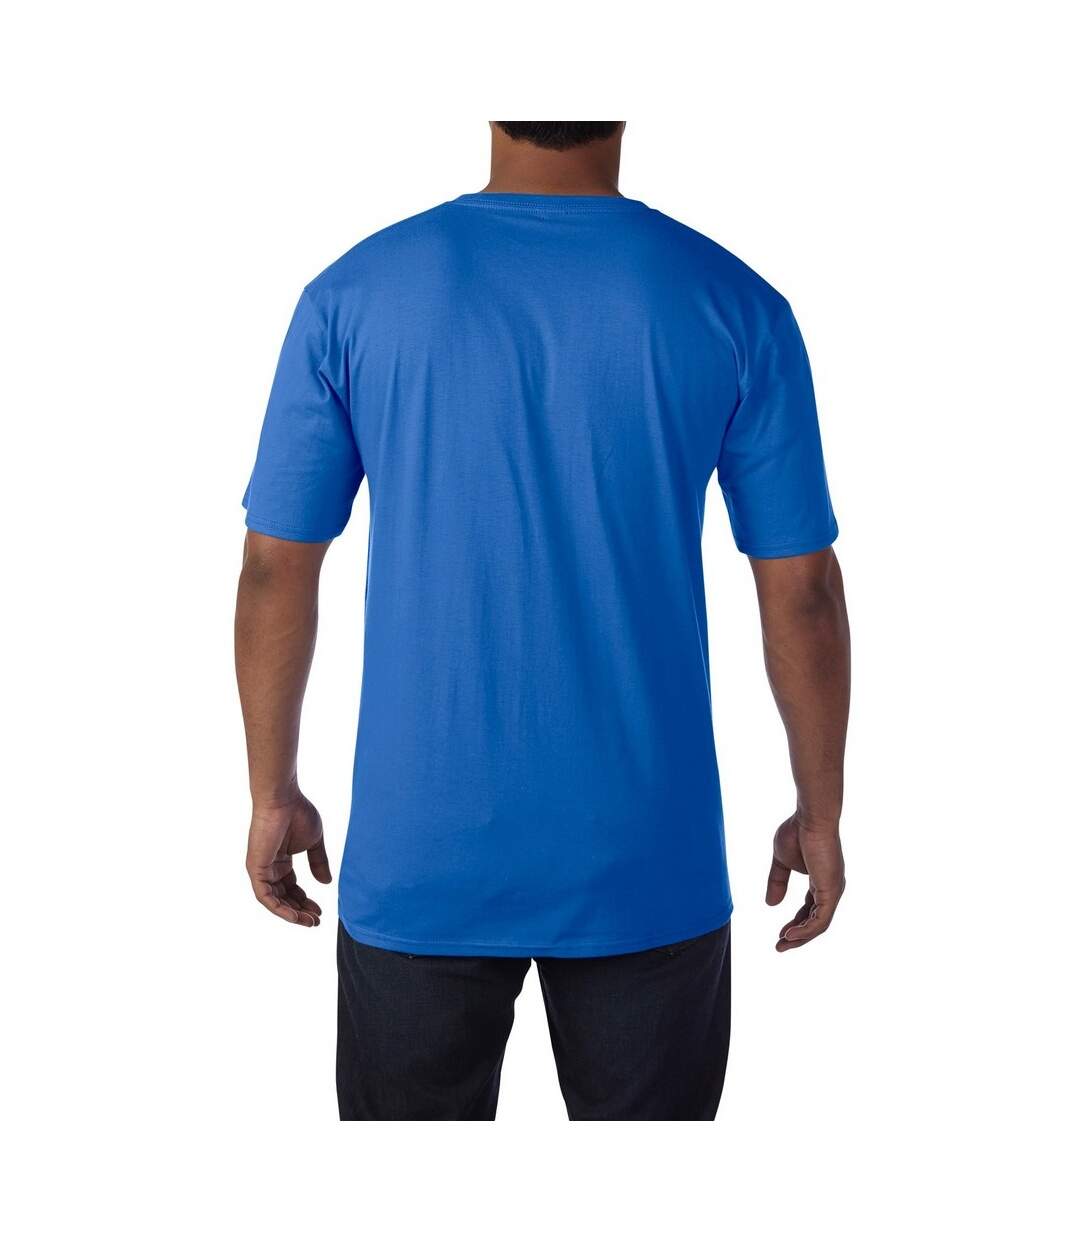 Gildan Adults Unisex Short Sleeve Premium Cotton V-Neck T-Shirt (Sport Grey) - UTRW4738